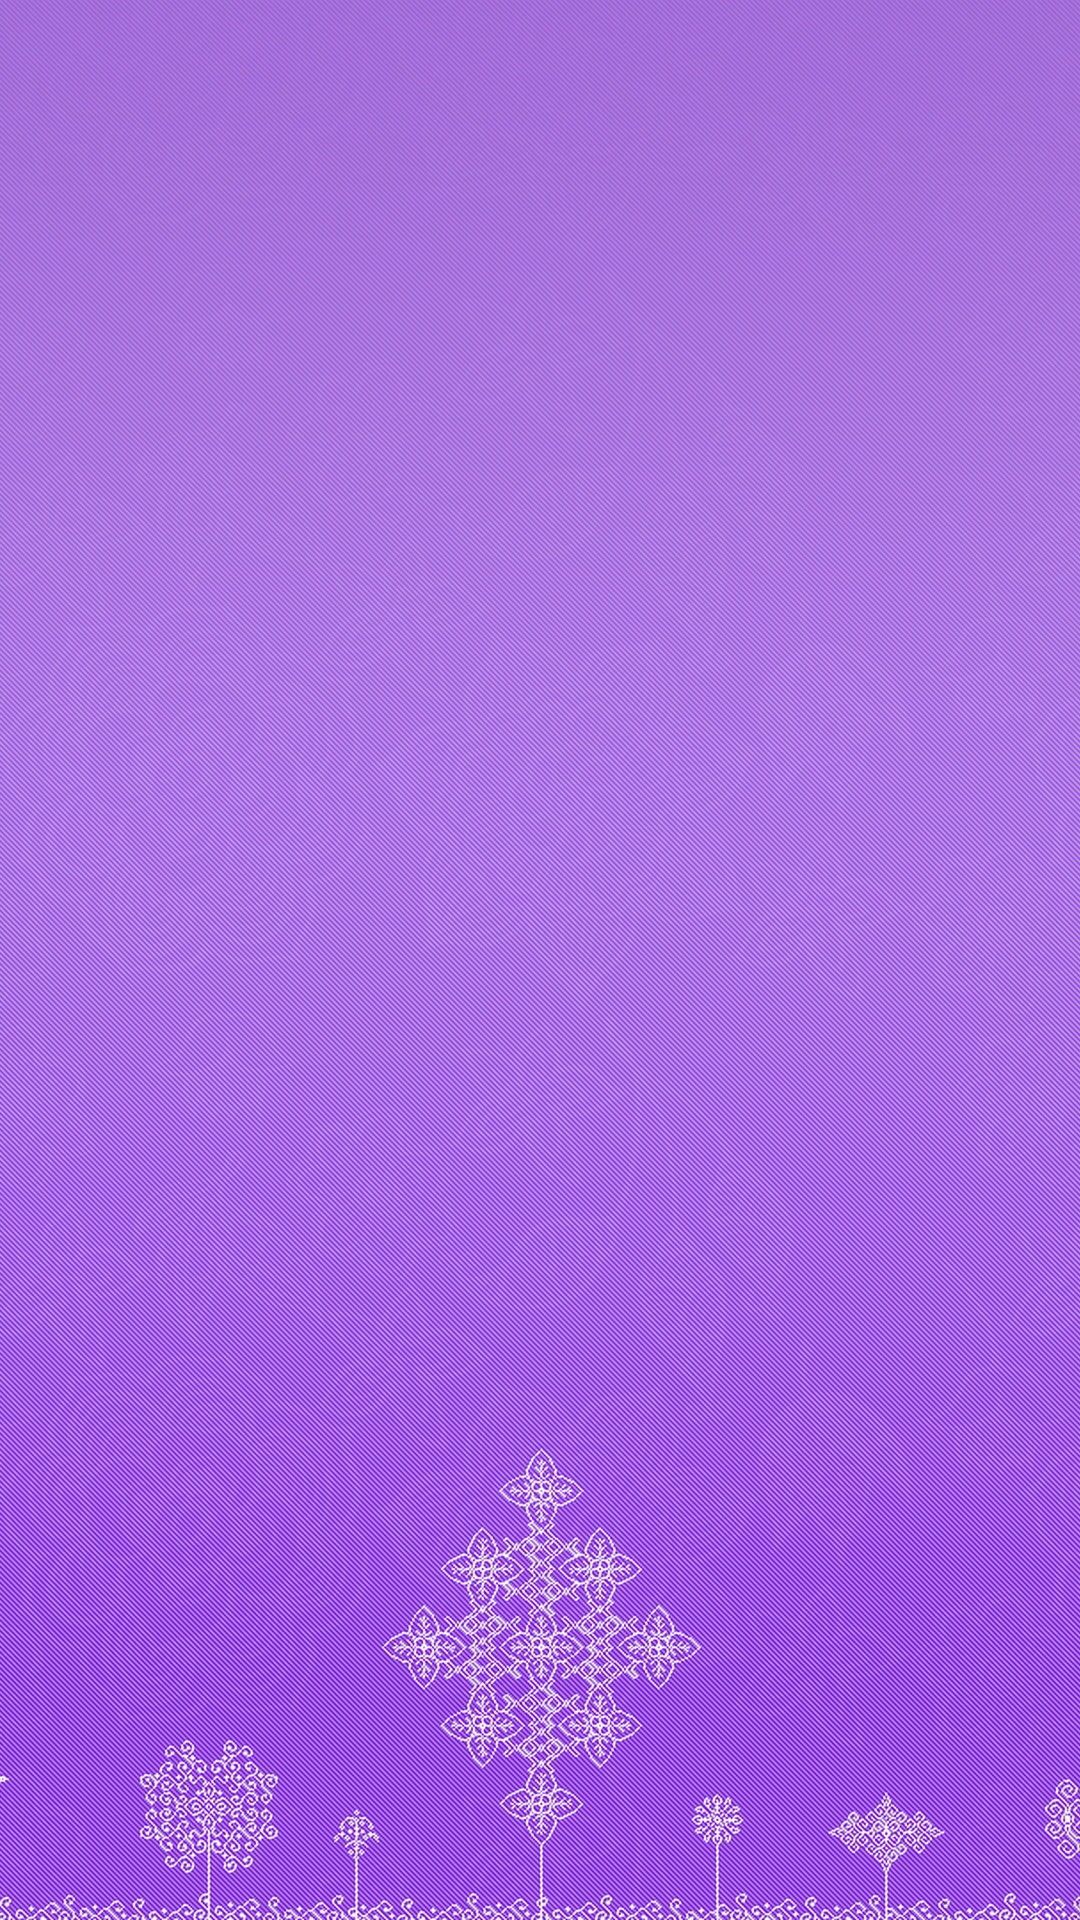 IPhone wallpaper purple with white patterns - Purple, cute purple